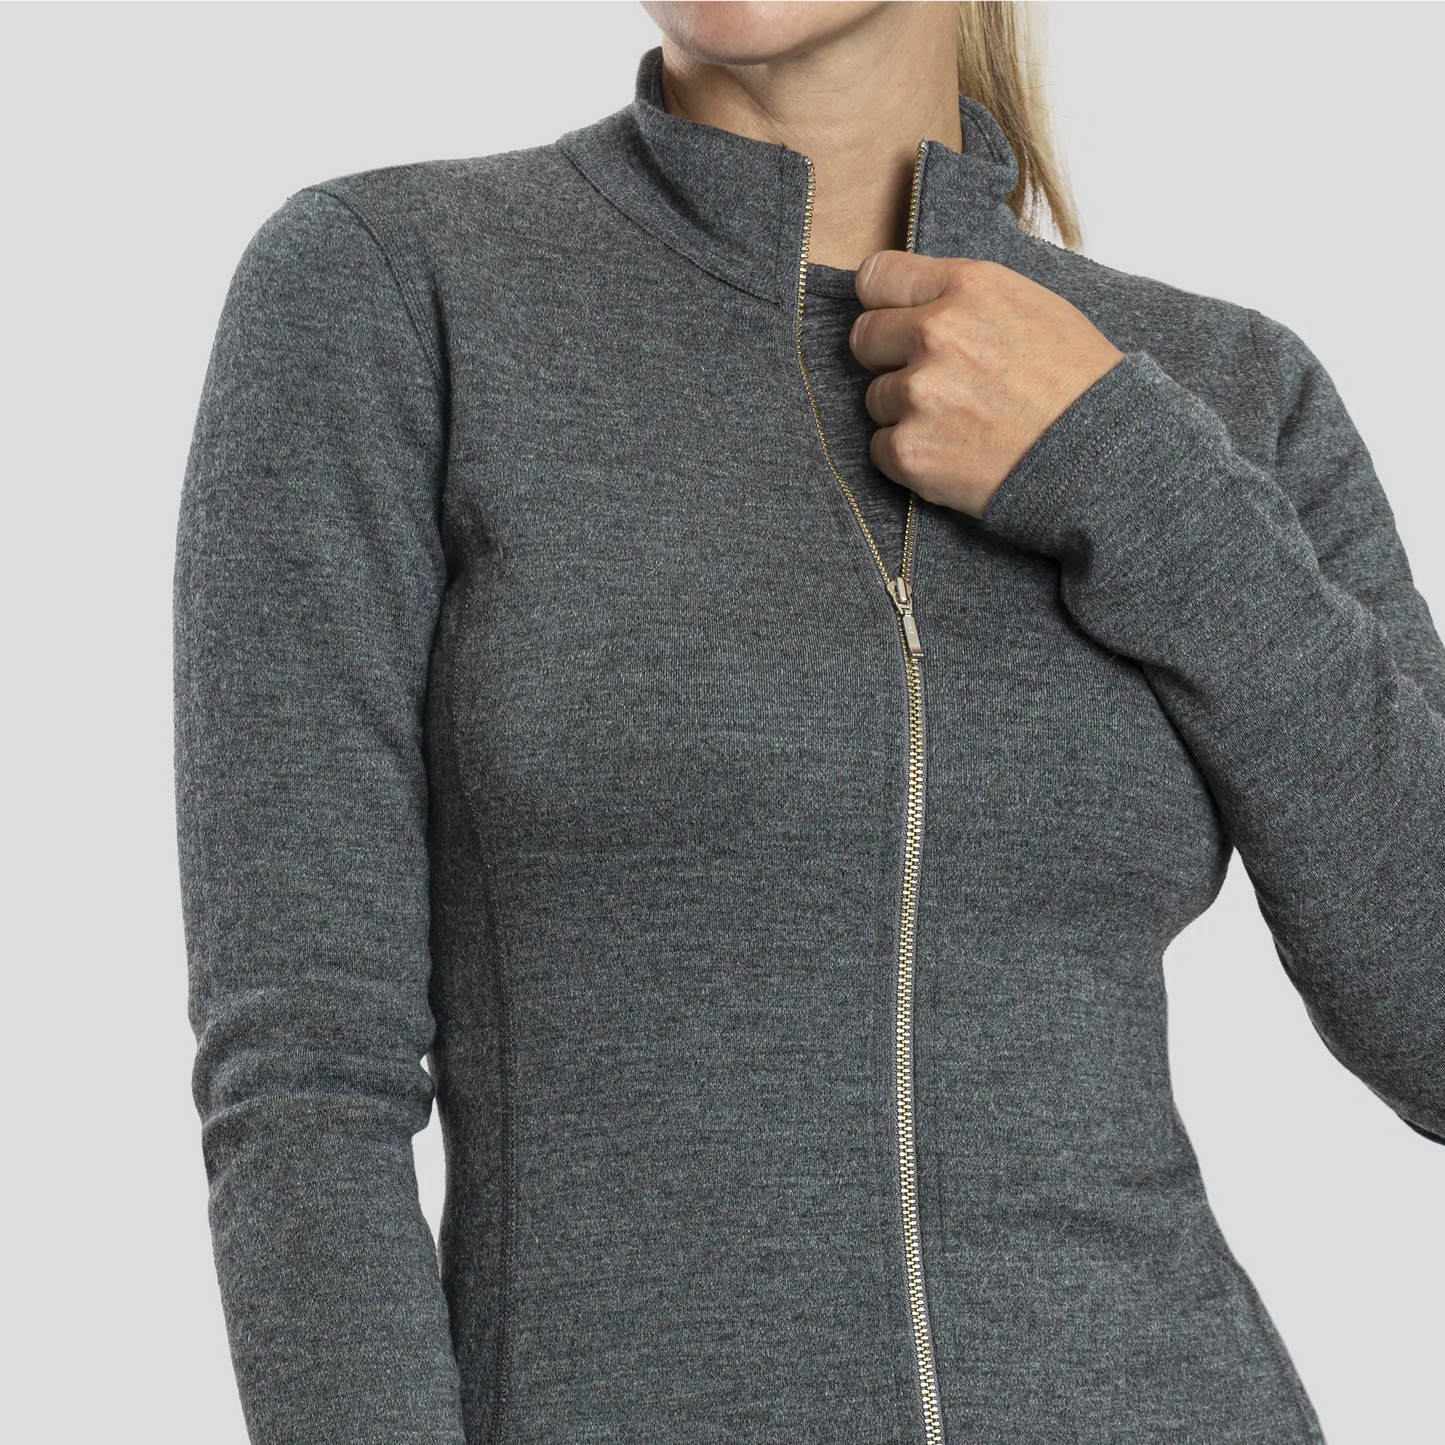 womens eco friendly jacket full zip color gray